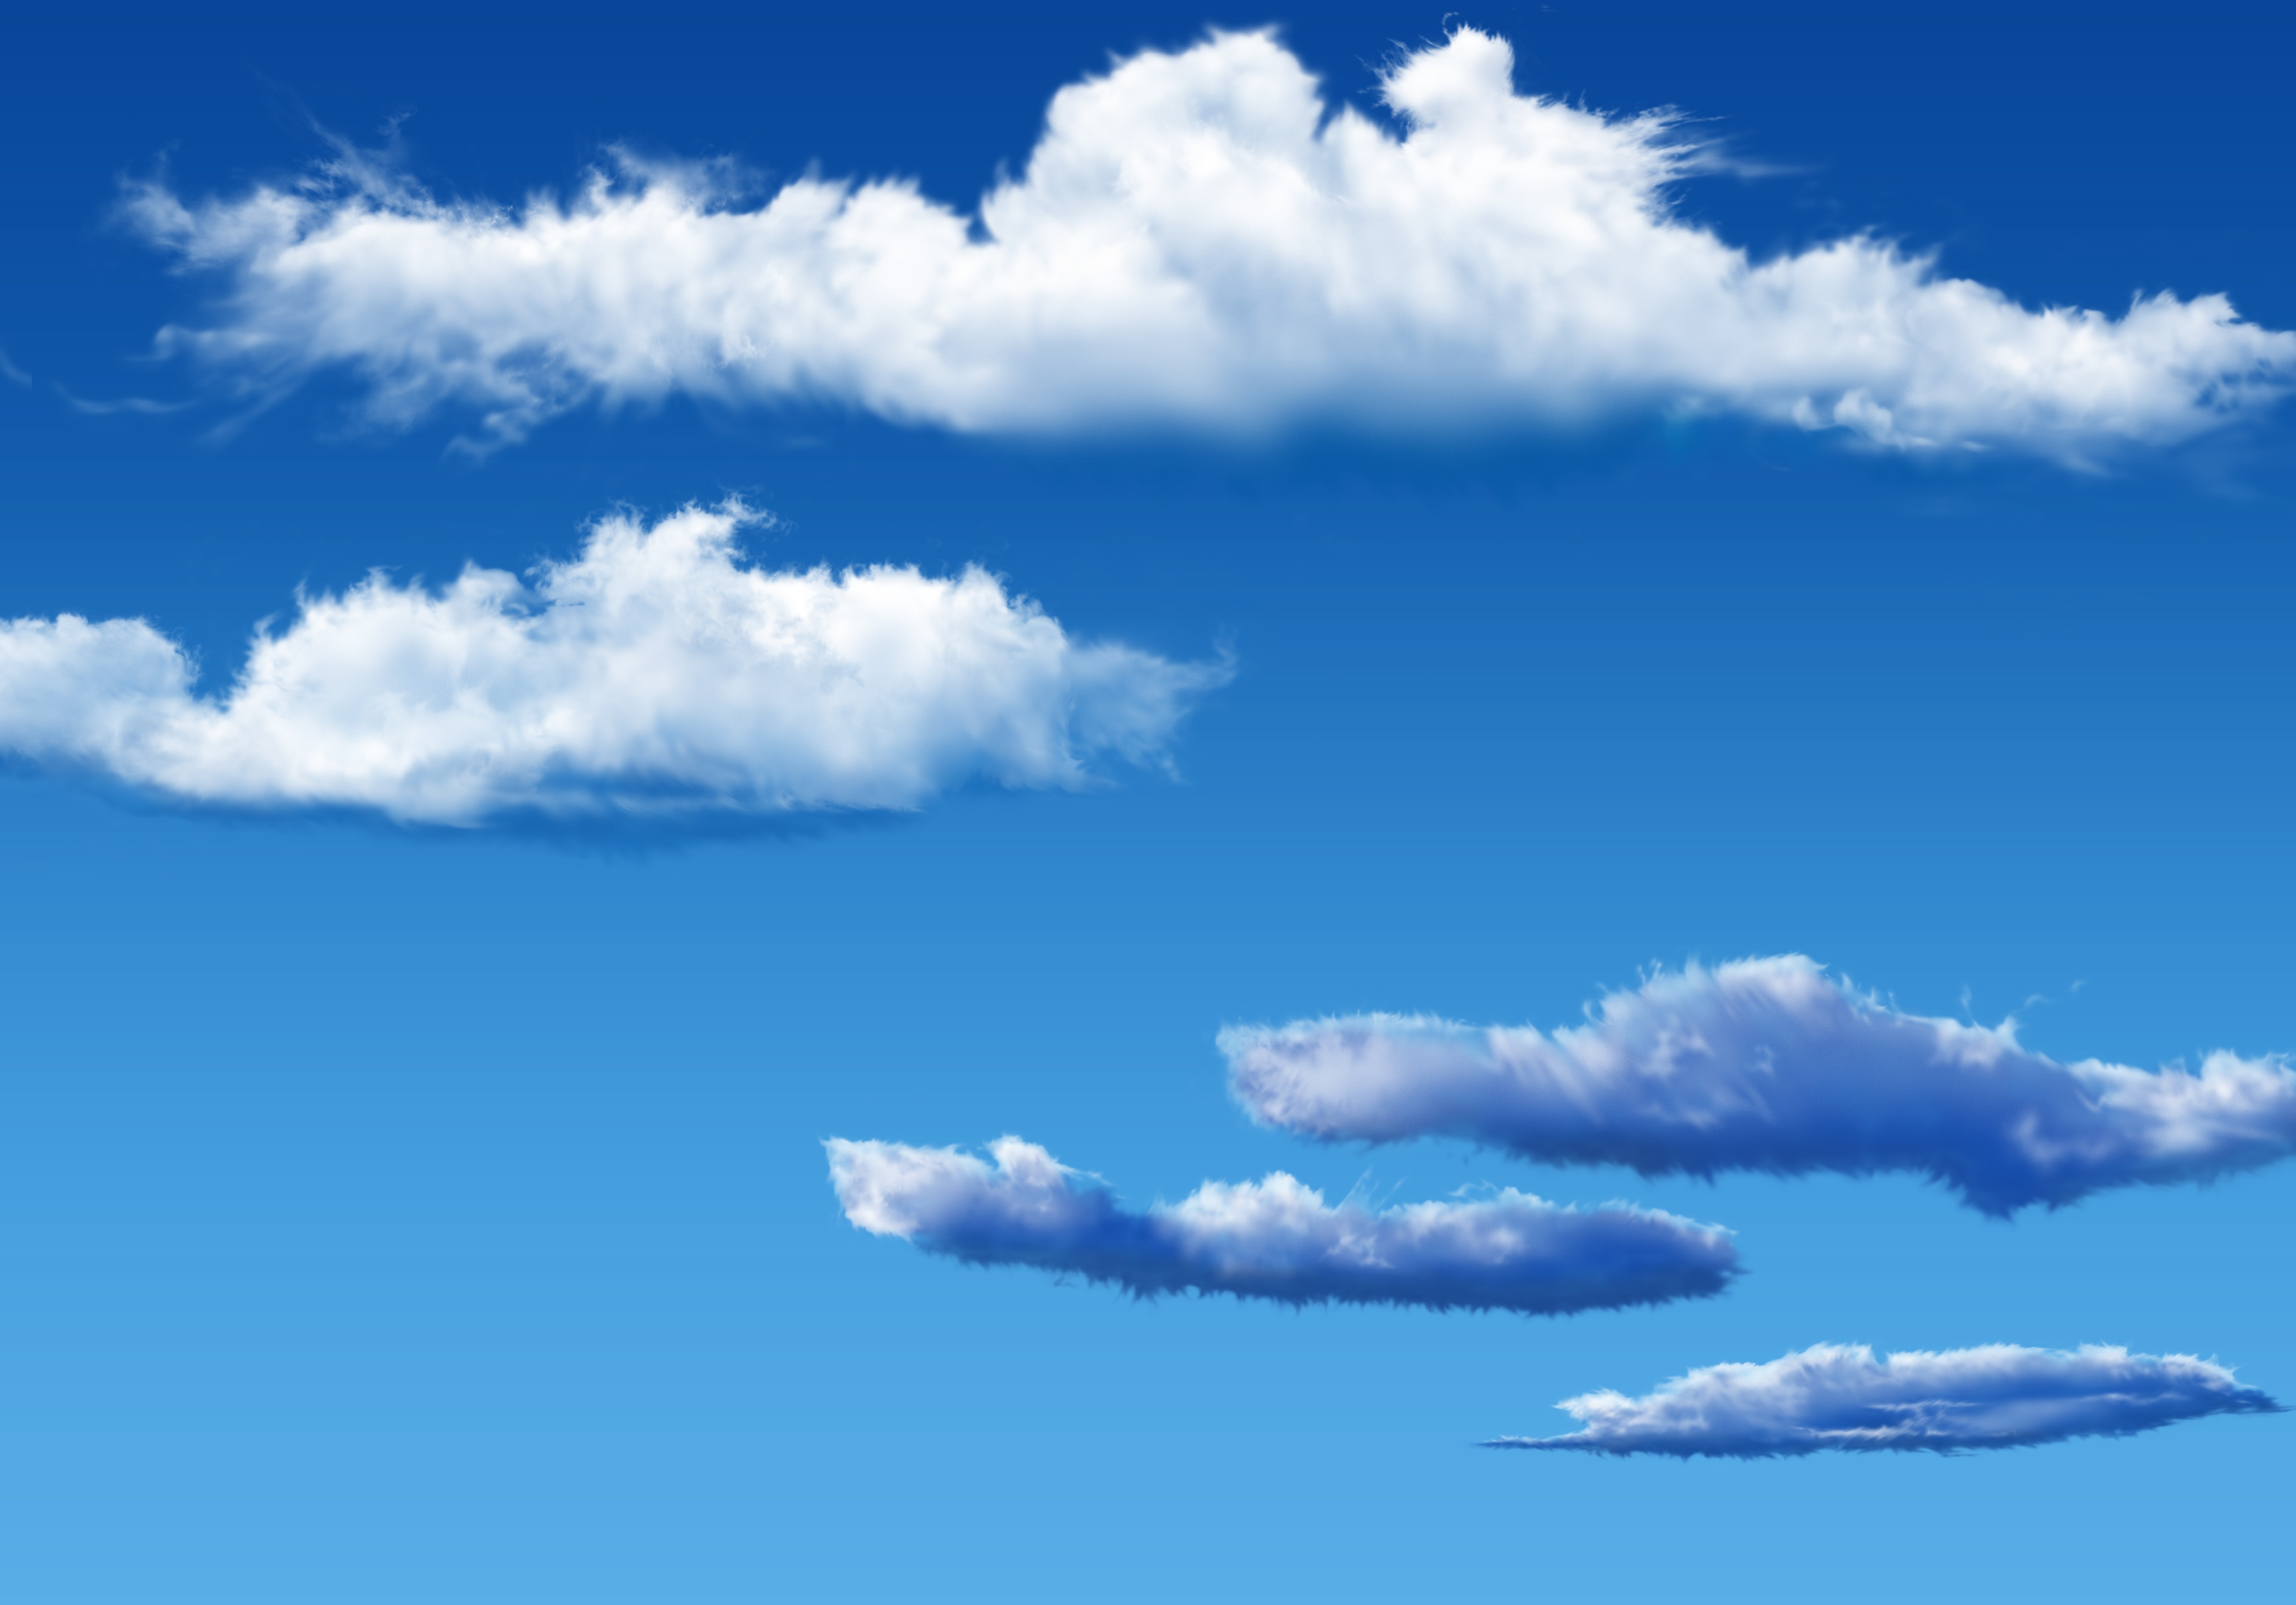 clouds, skyscapes - desktop wallpaper